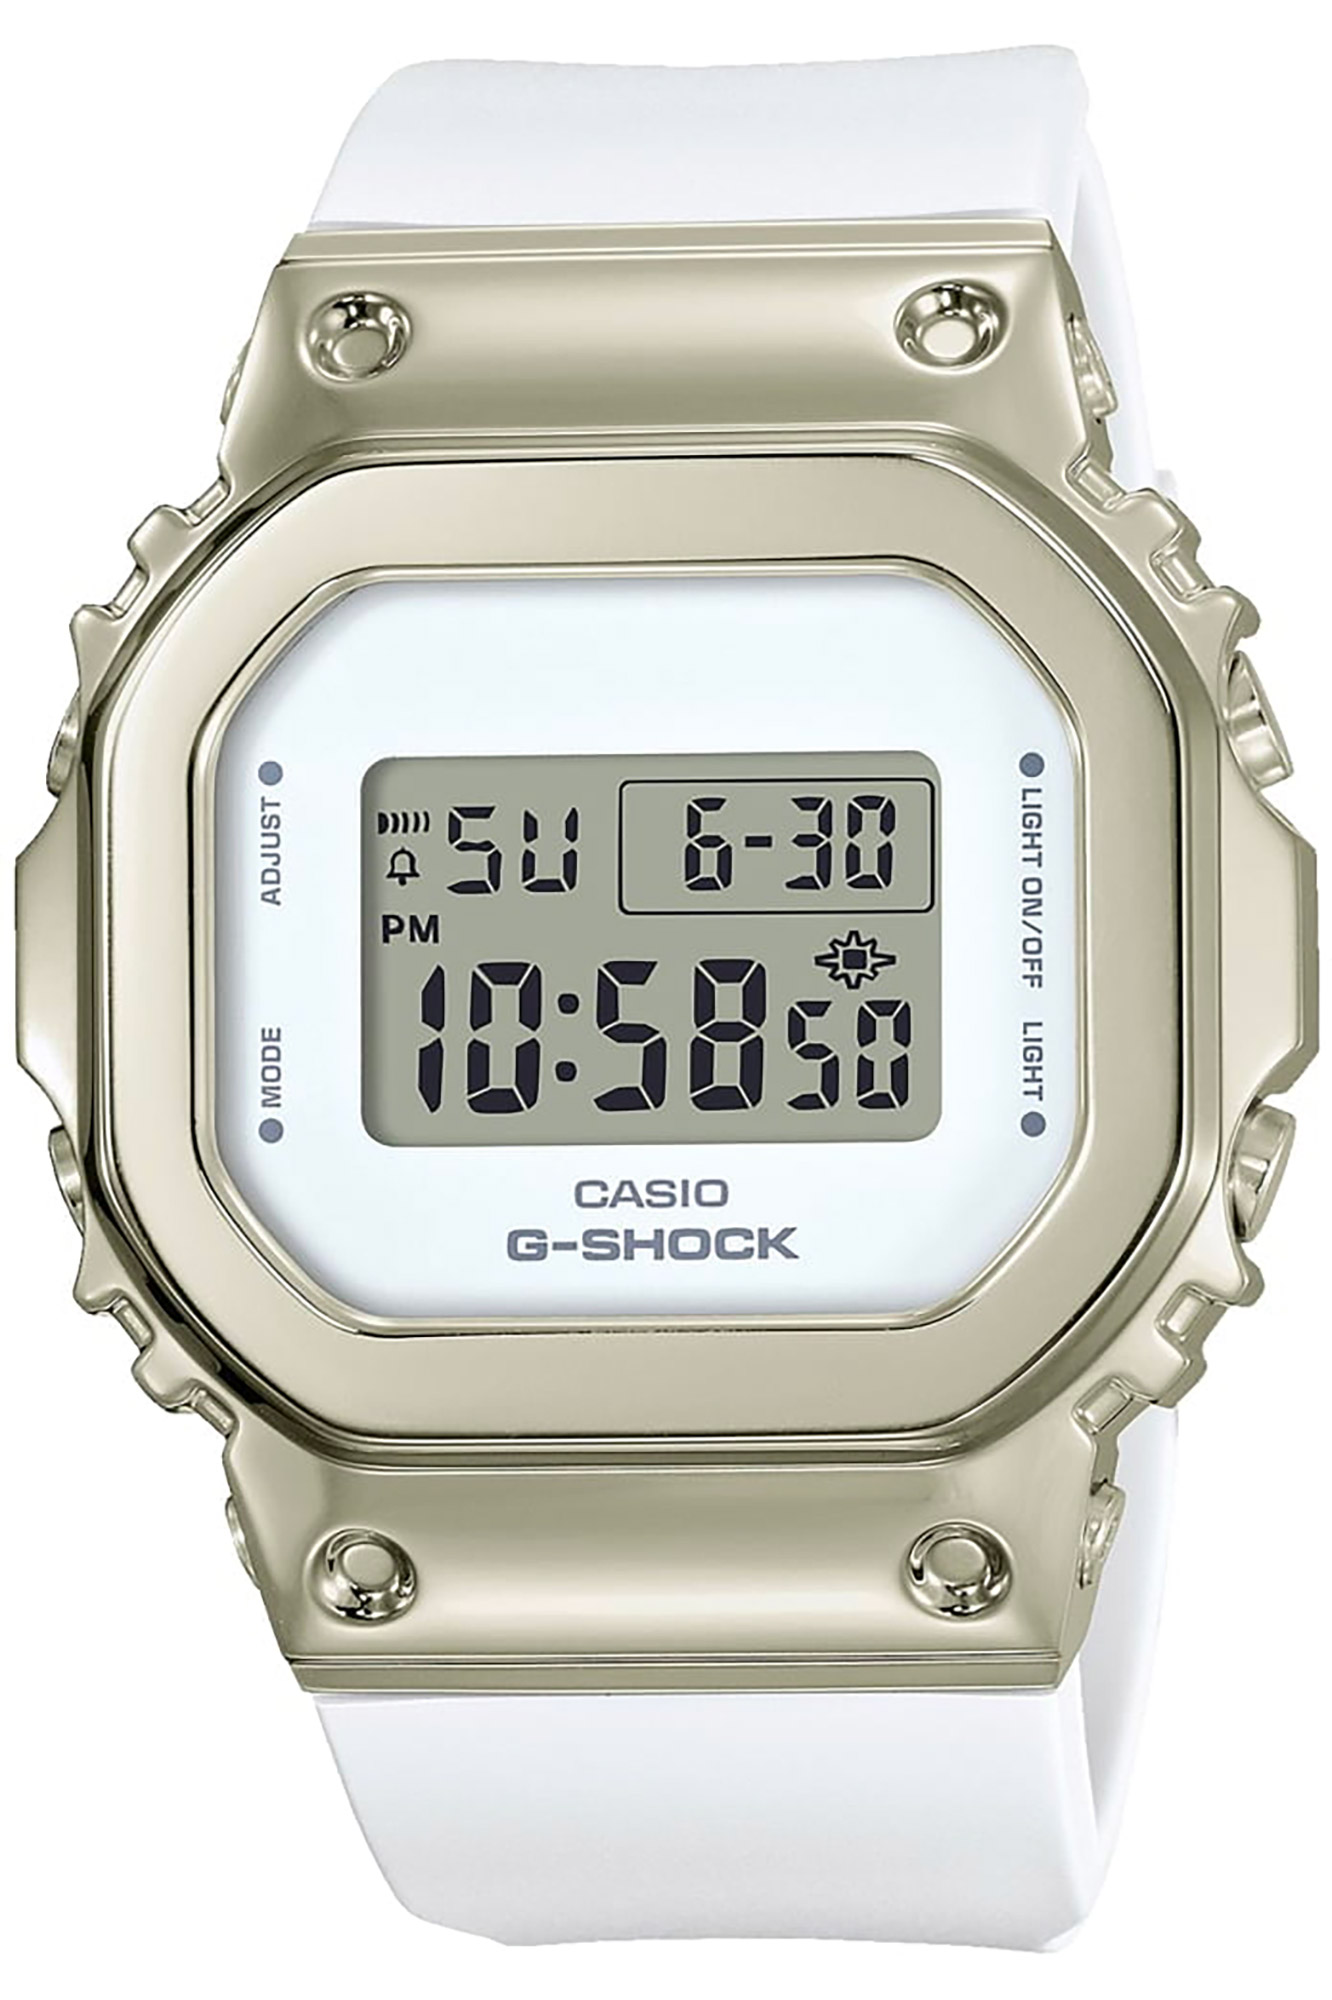 Reloj CASIO G-Shock gm-s5600g-7er